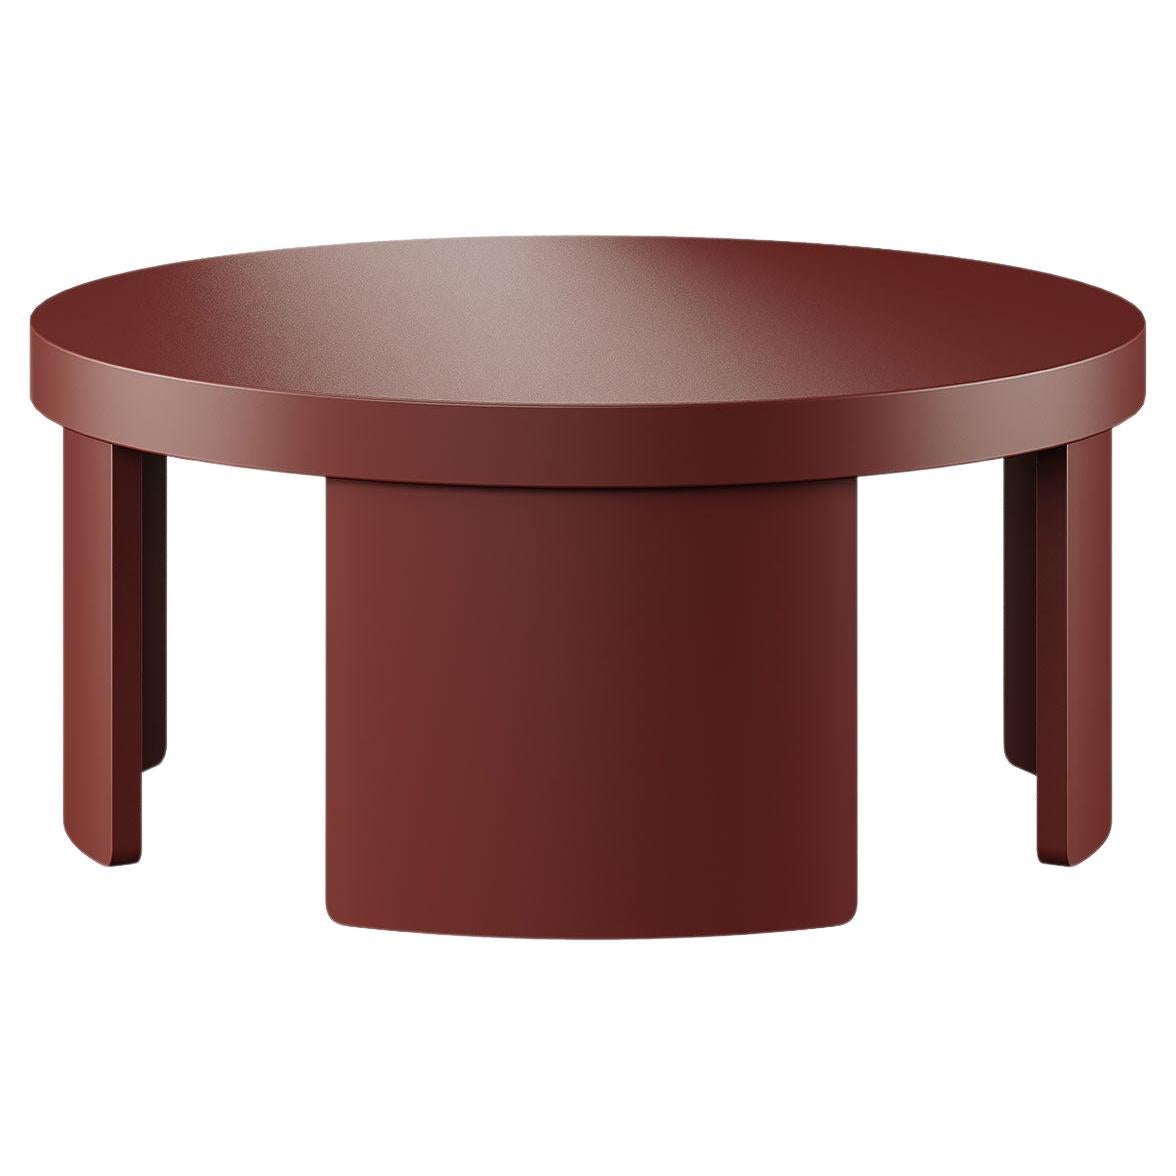 Mid-century Modern Round Coffee Table Dark Red Brown Matte Lacquer